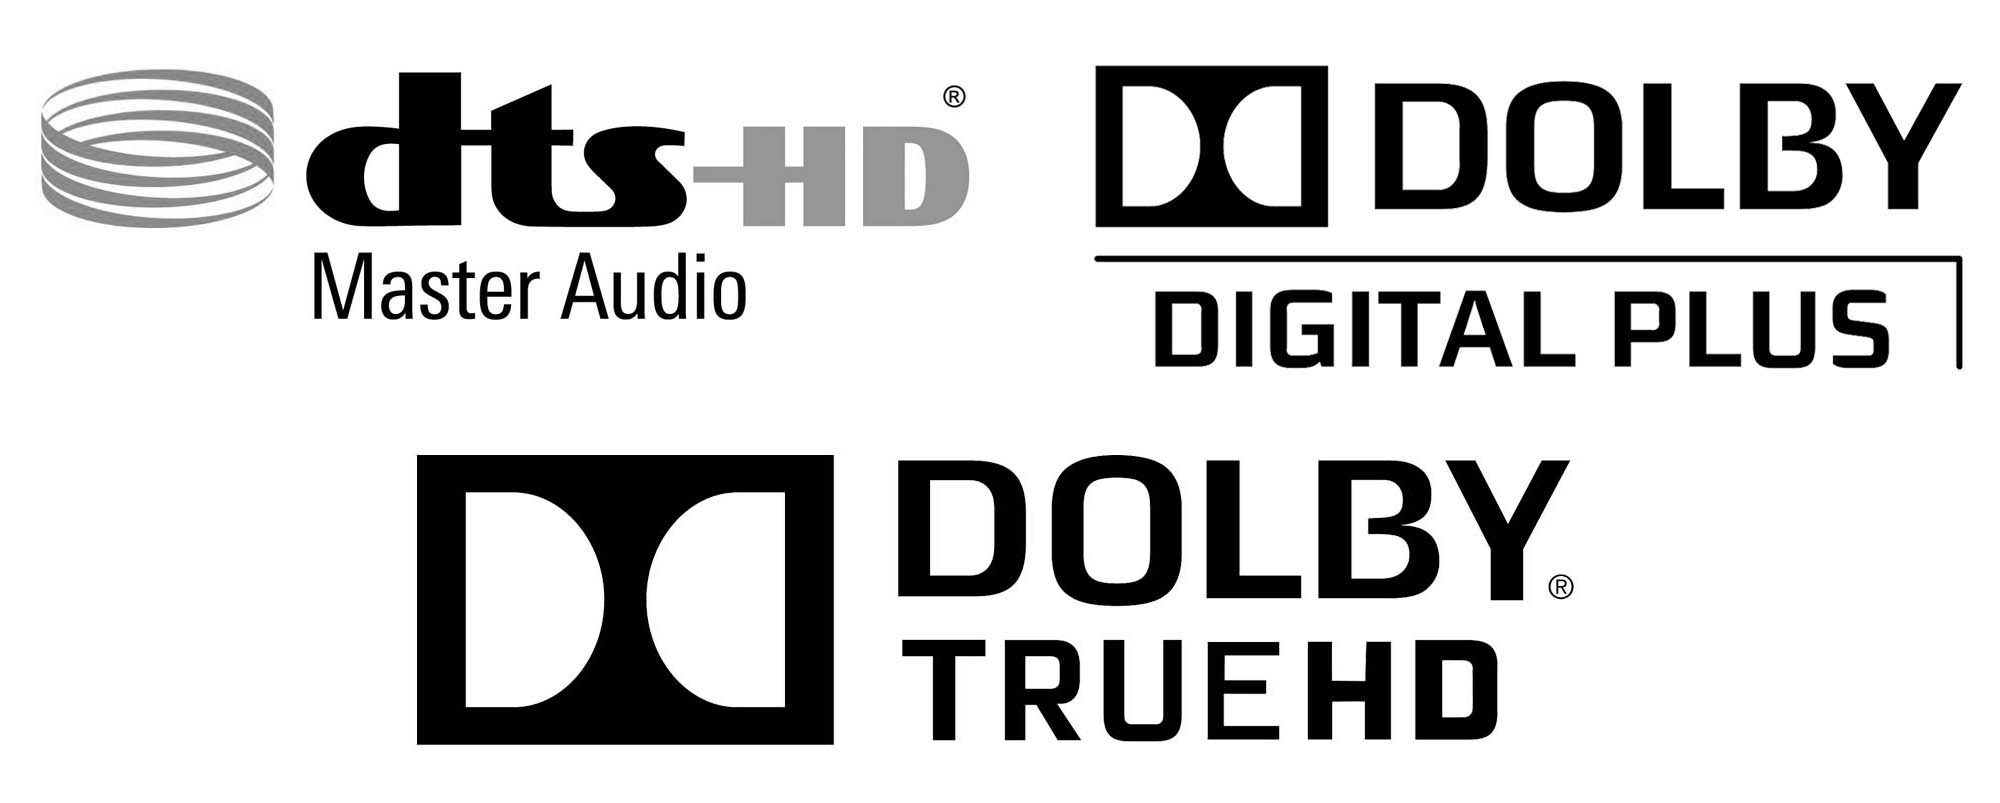 Dolby TrueHD Dolby Digital Plus DTS-HD audio 7.1 format logos